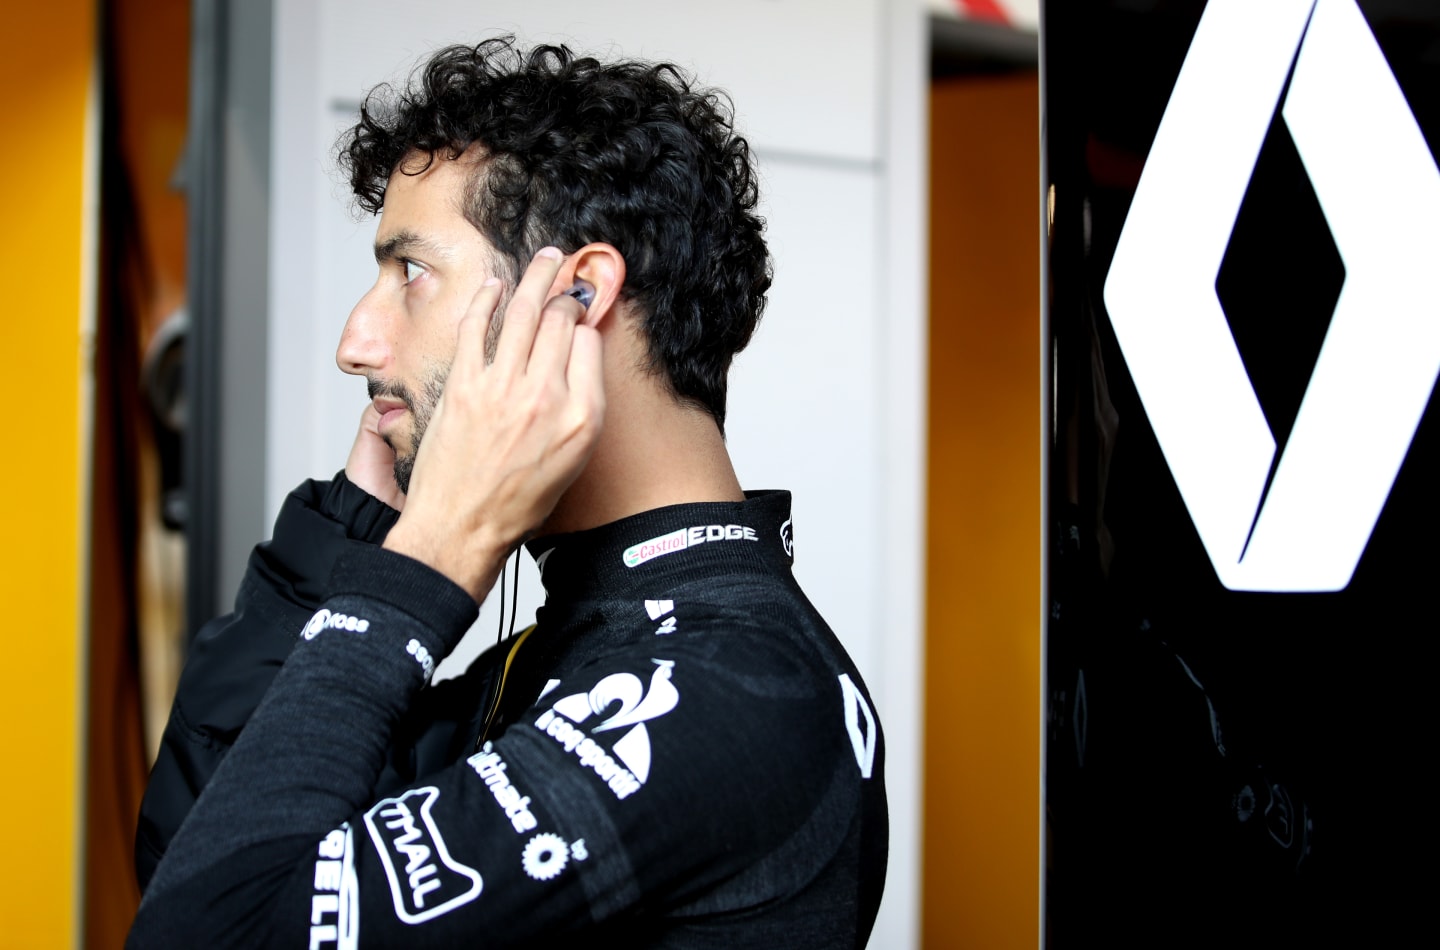 BARCELONA, SPAIN - FEBRUARY 19: Daniel Ricciardo of Australia and Renault Sport F1 prepares to